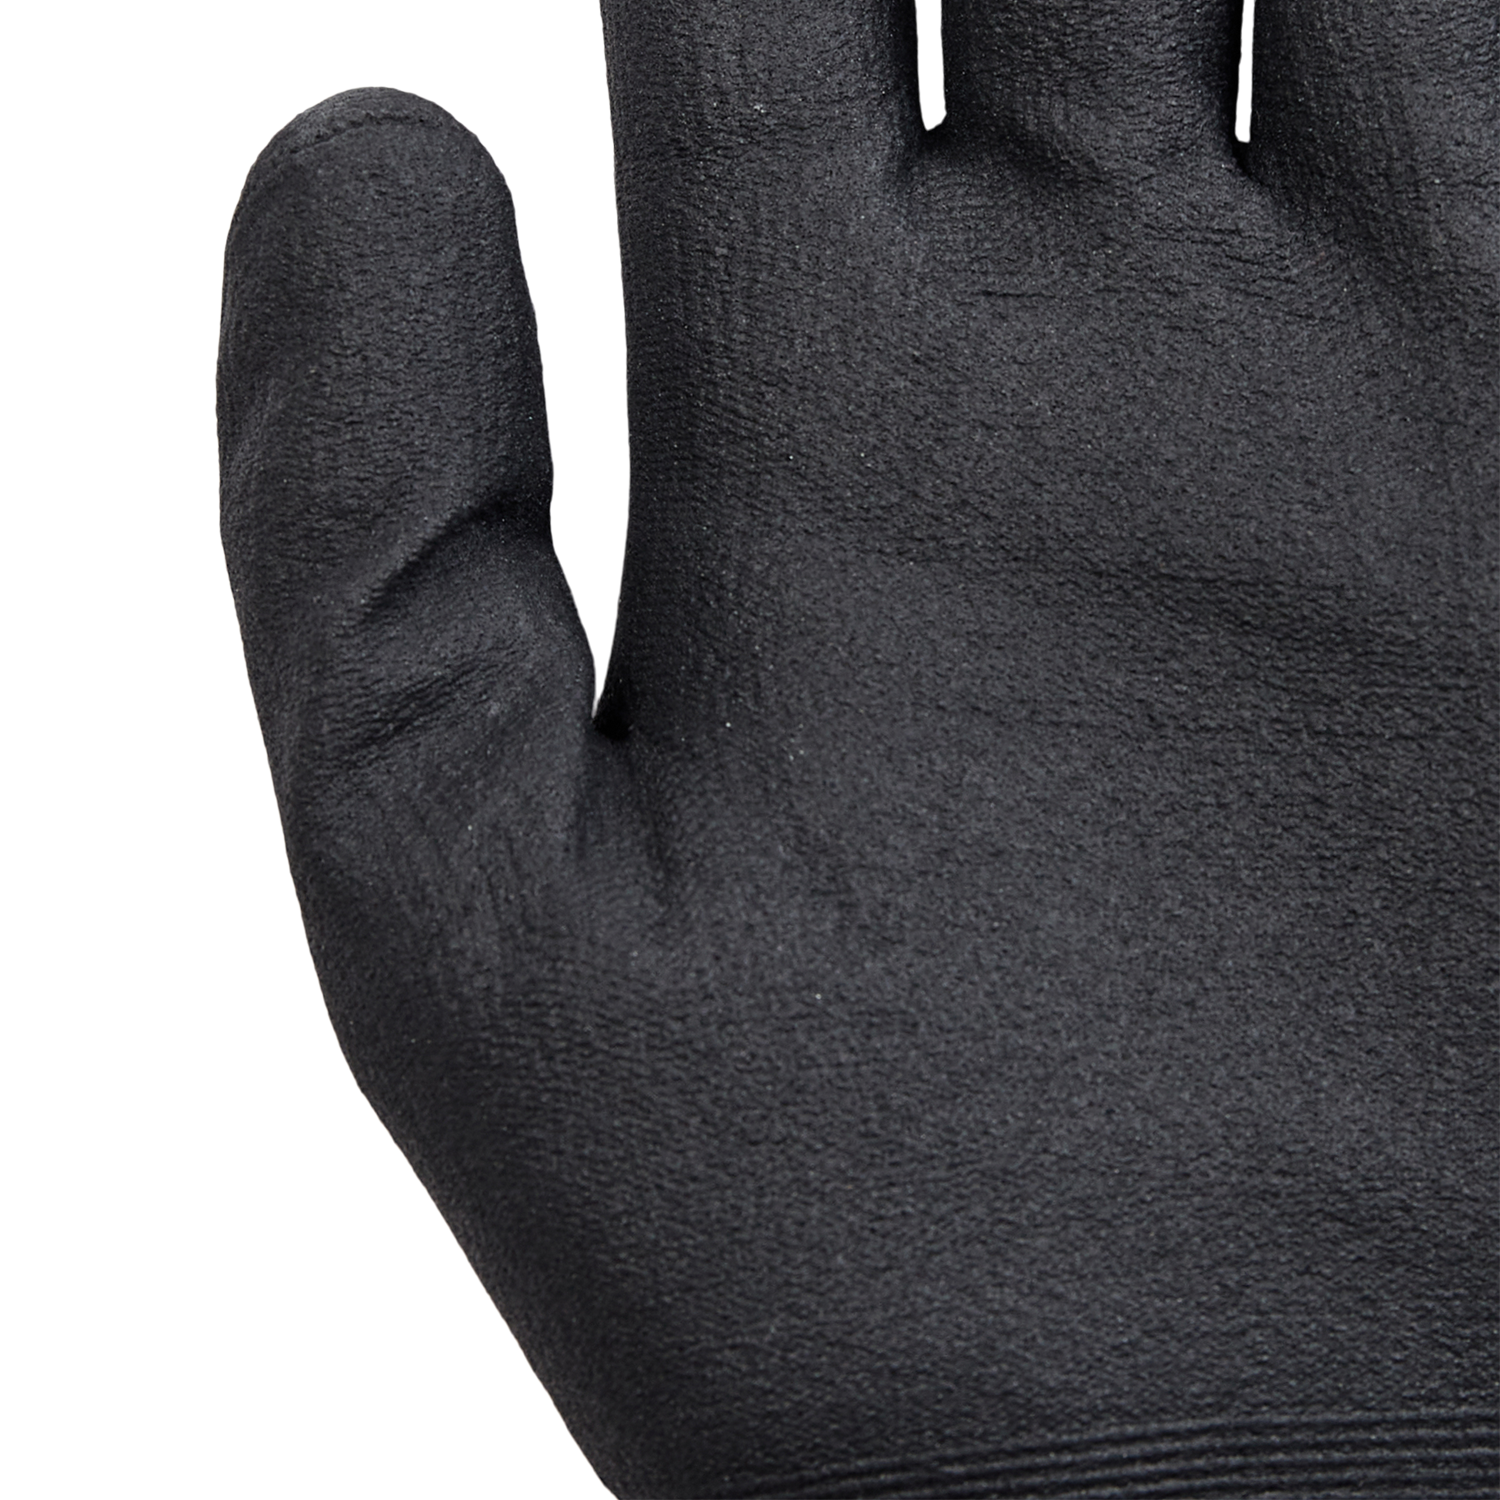 NORSE Flex Supreme assembly gloves size 12